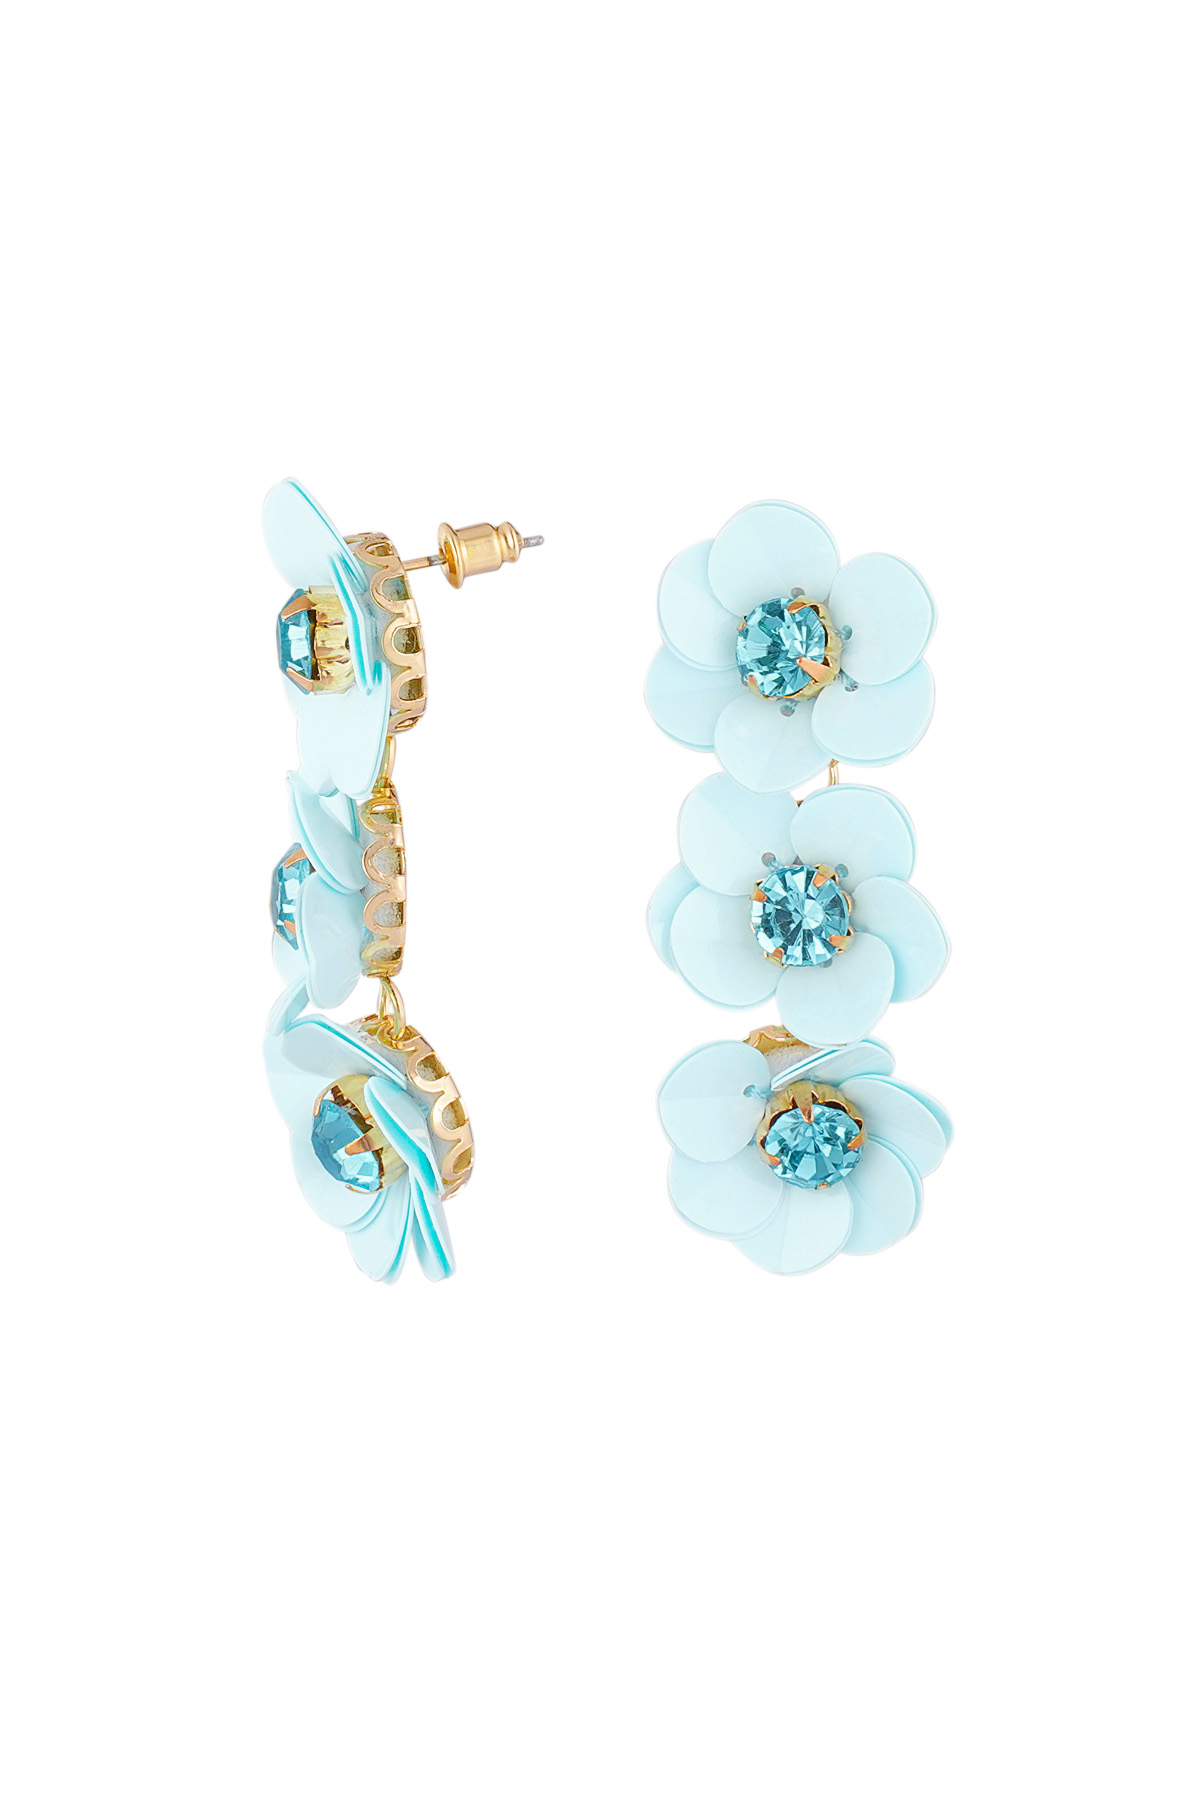 Summery floral trio earrings - light blue h5 